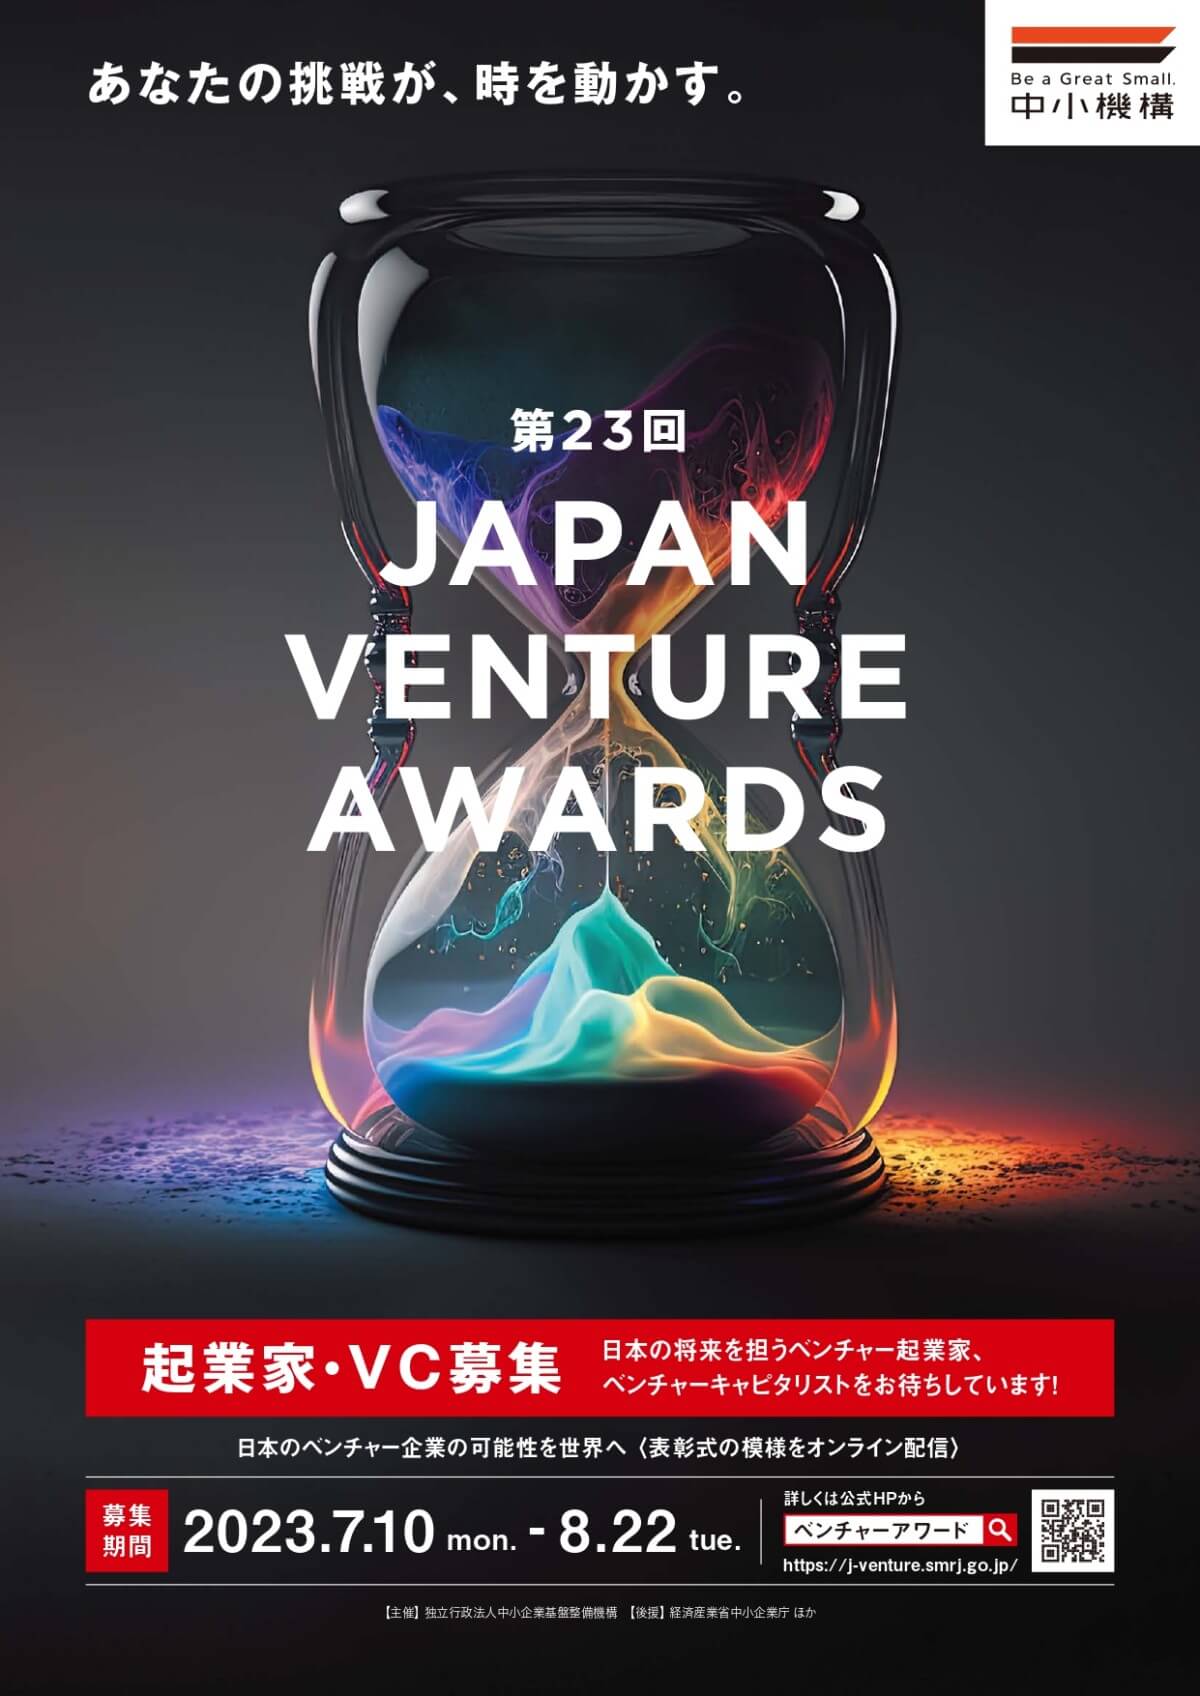 【締切8/22】「第23回 Japan Venture Awards」起業家・VC募集